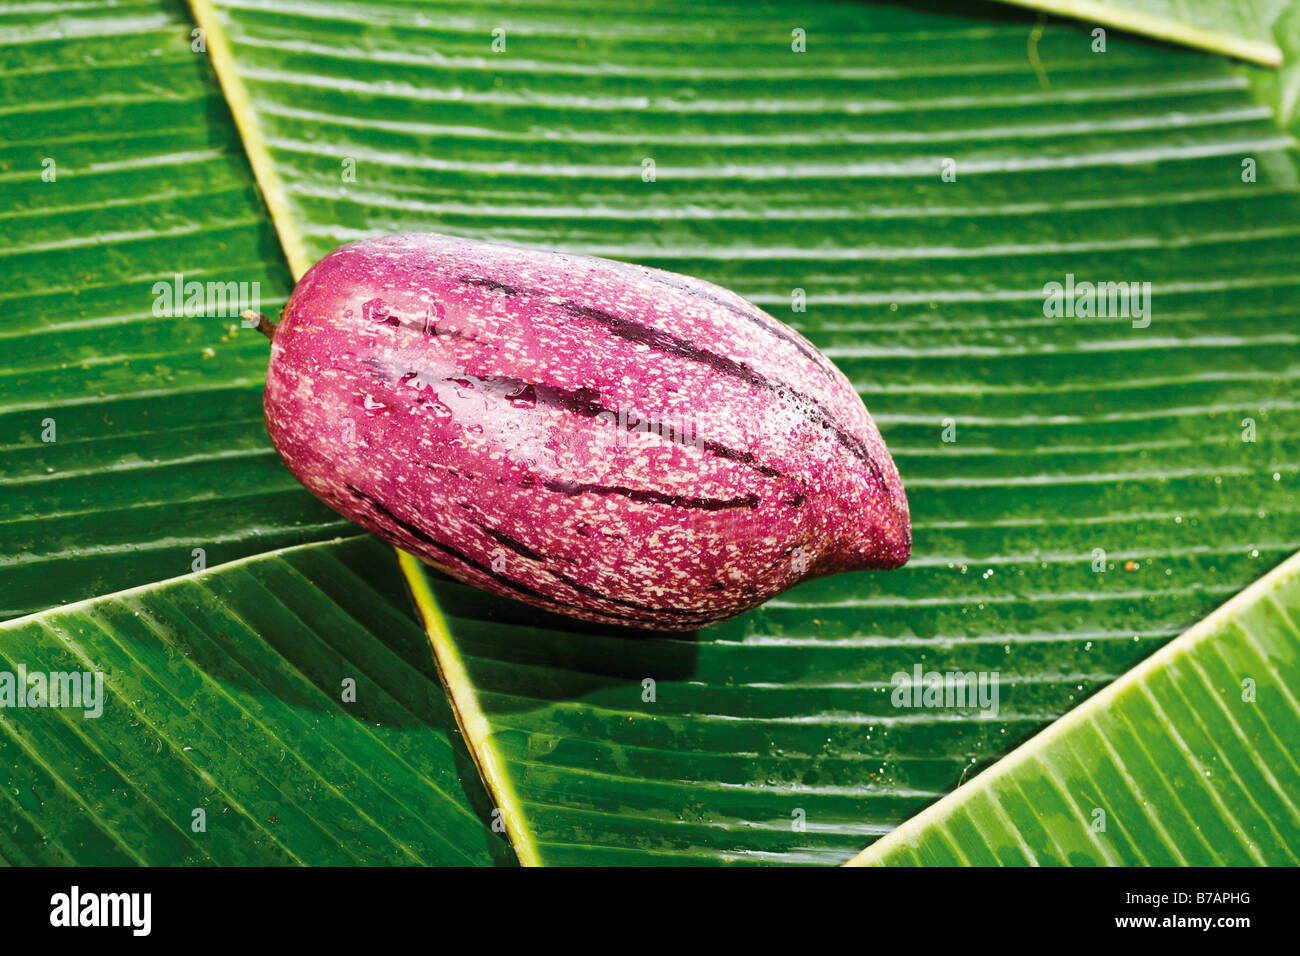 Pepino Melon or Melon Pear (Solanum muricatum), on banana leaves Stock Photo